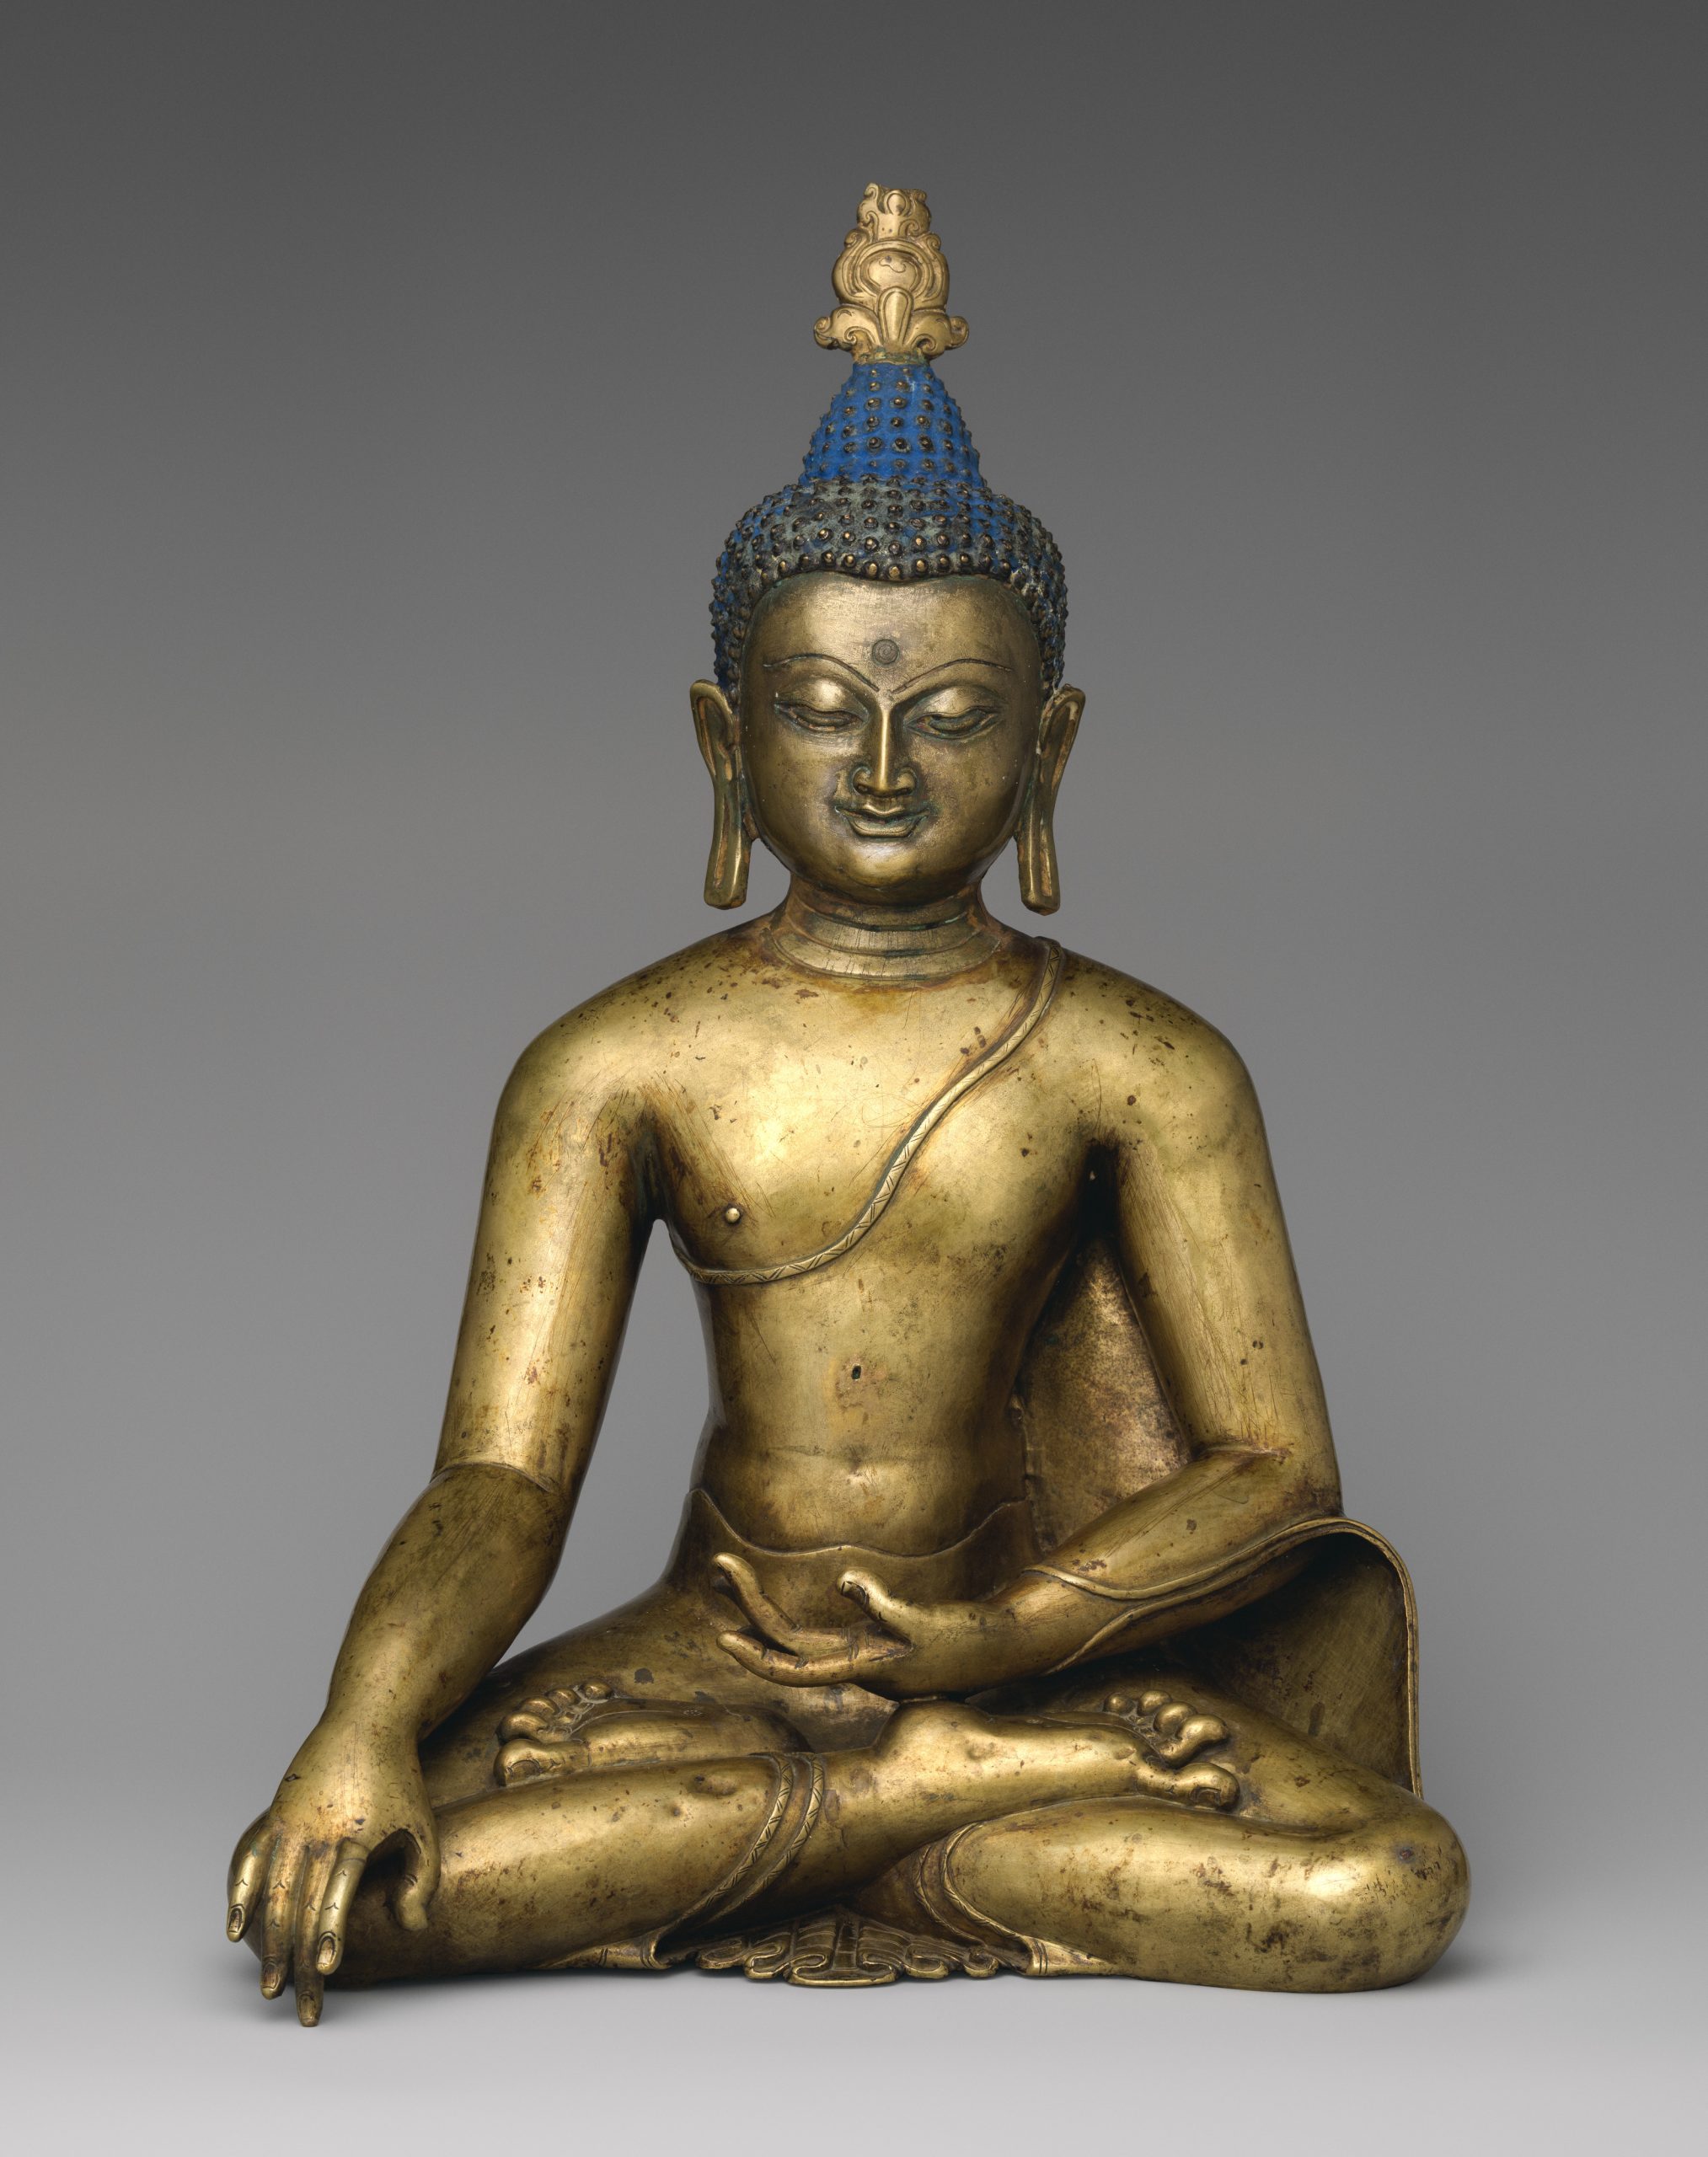 A photograph of a sculpture of a buddha from 12th century Tibet